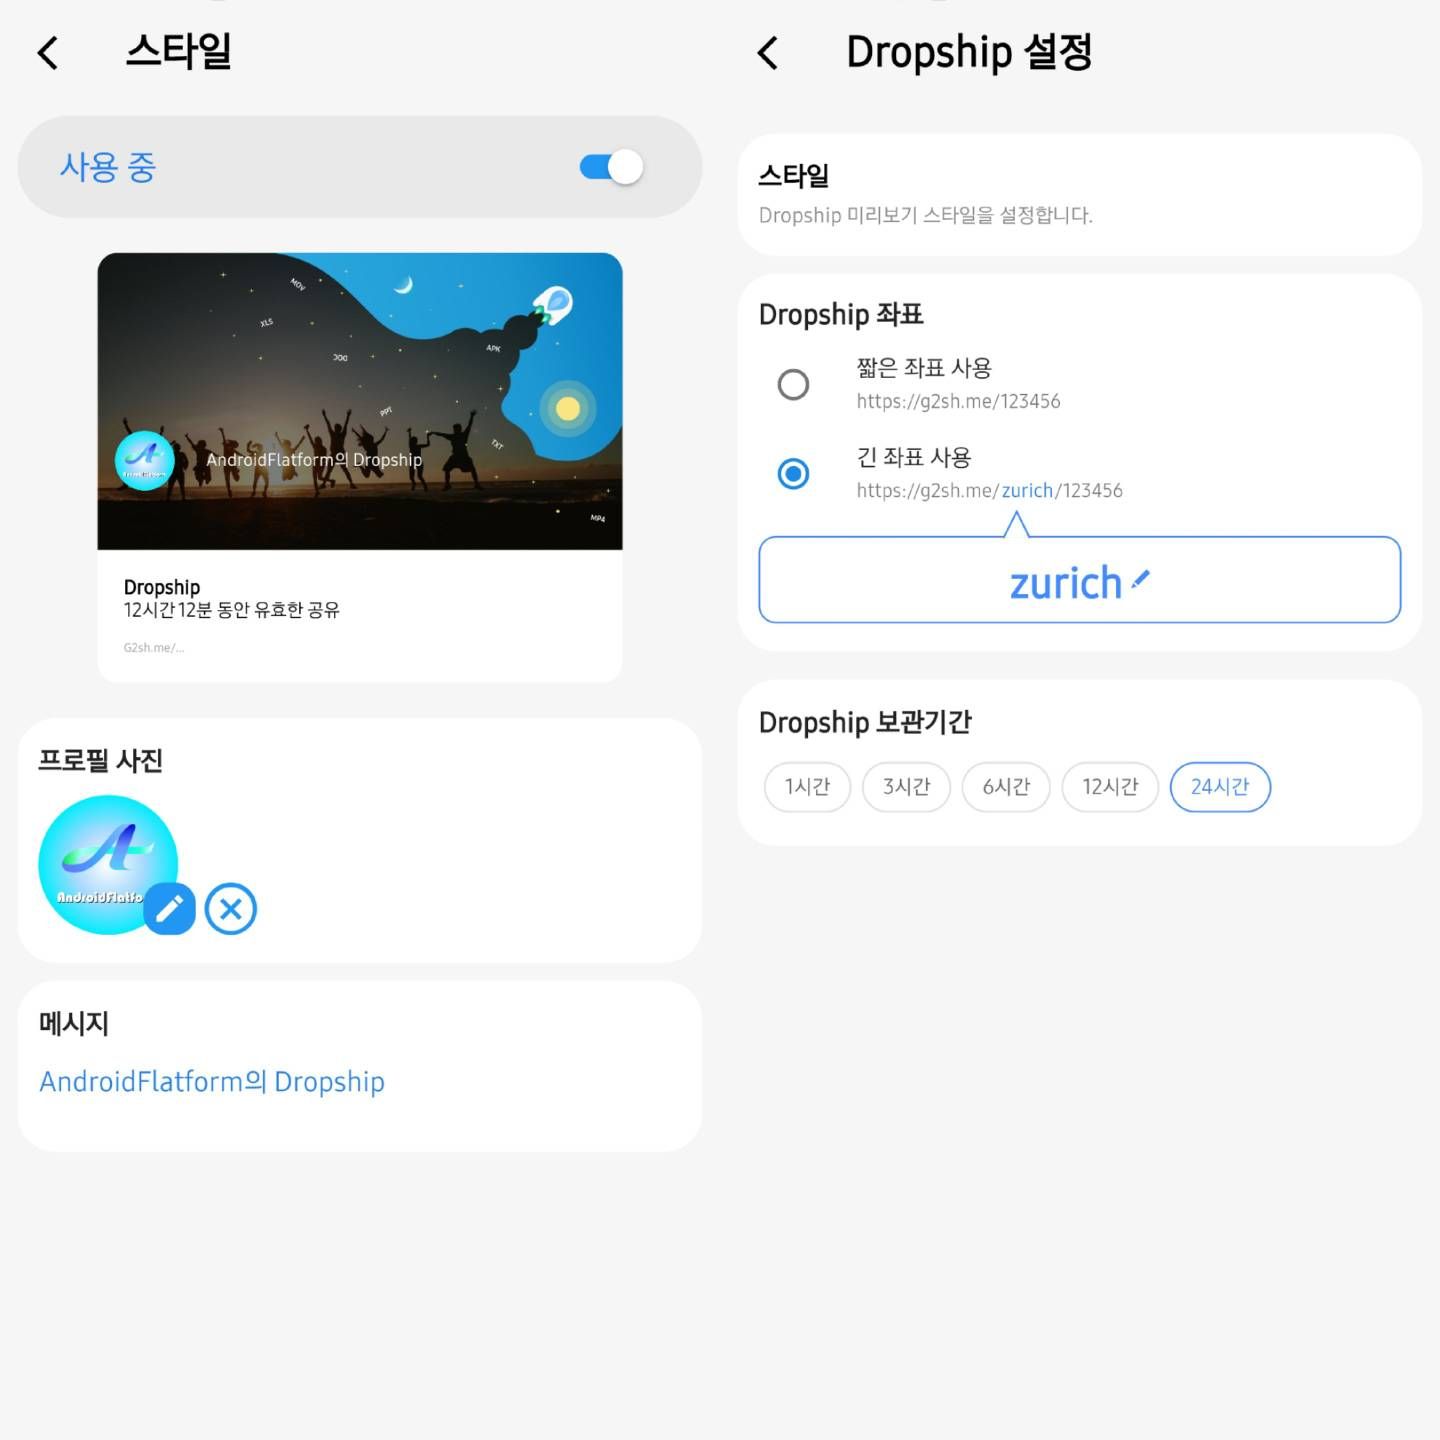 Samsung ออกแอปใหม่ Dropship สามารถแชร์หรือส่งไฟล์ไปยังอุปกรณ์ใดก็ได้ (รวมถึง iPhone ด้วย)